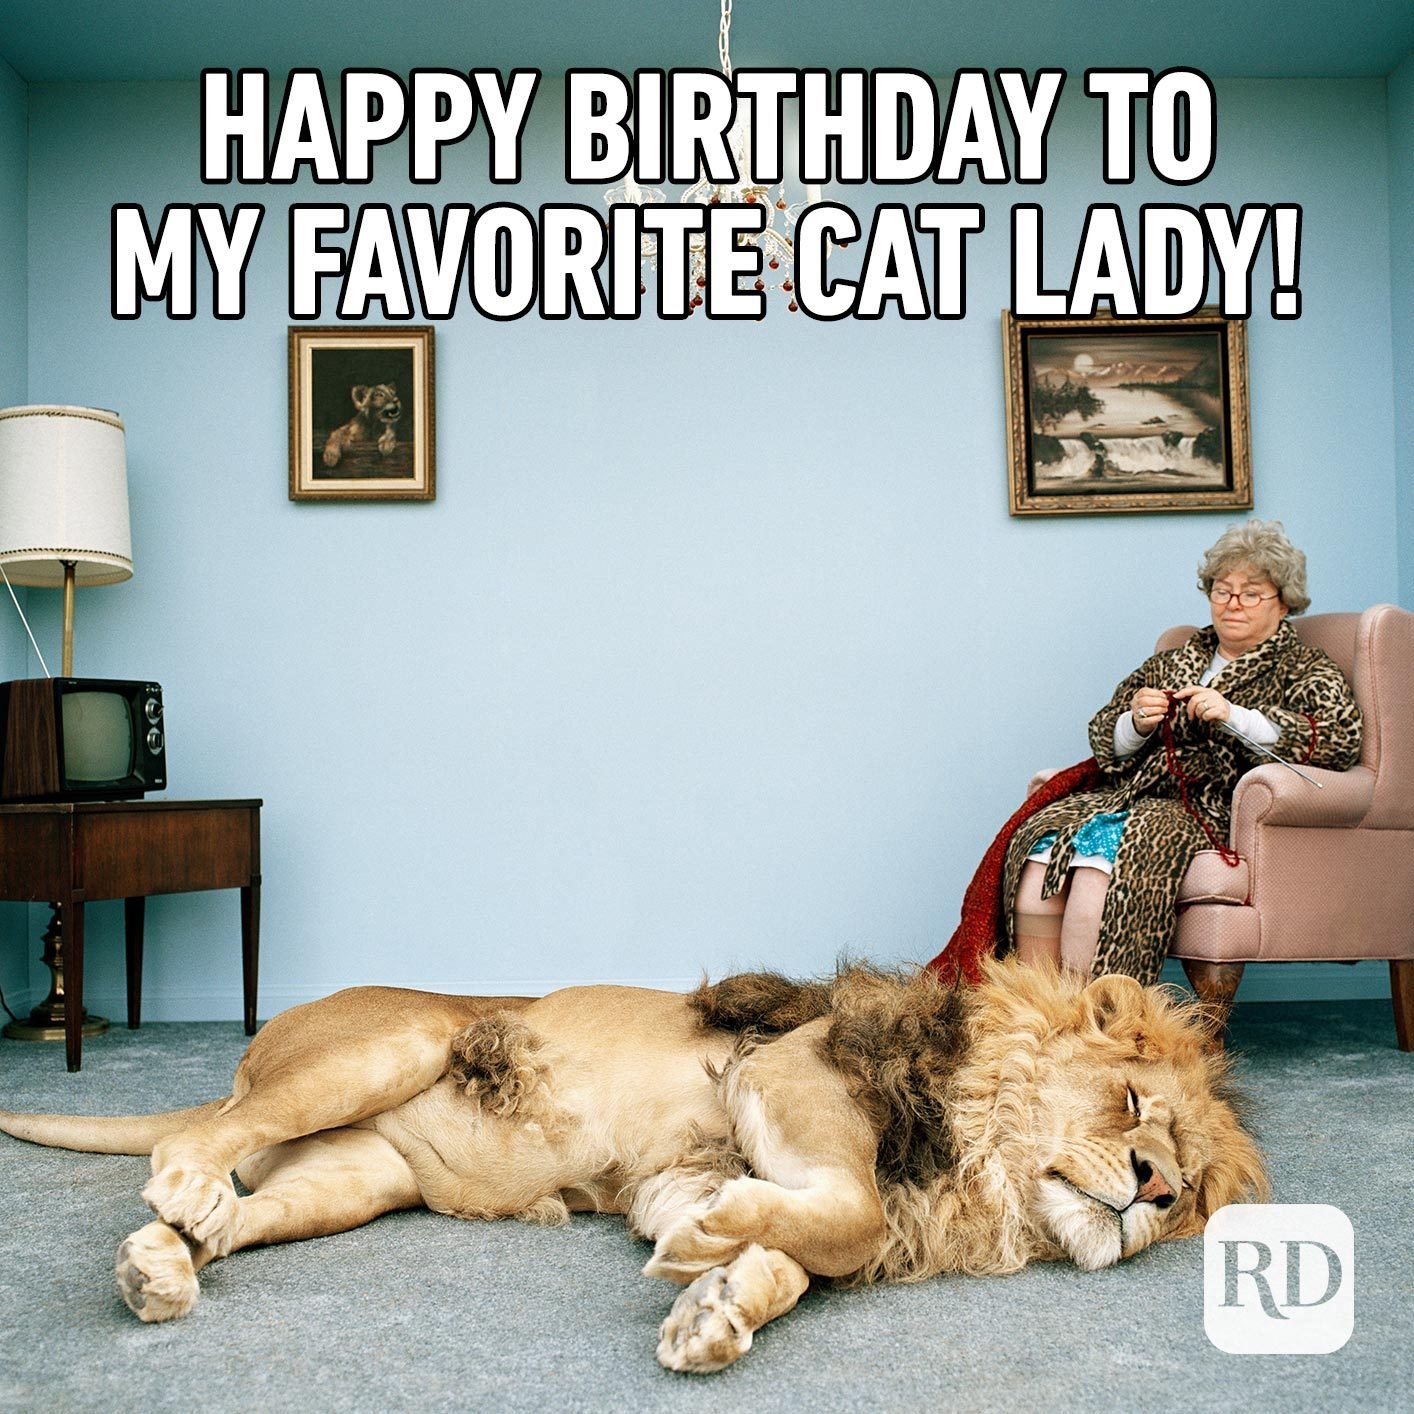 Happy Birthday to my favorite cat lady!